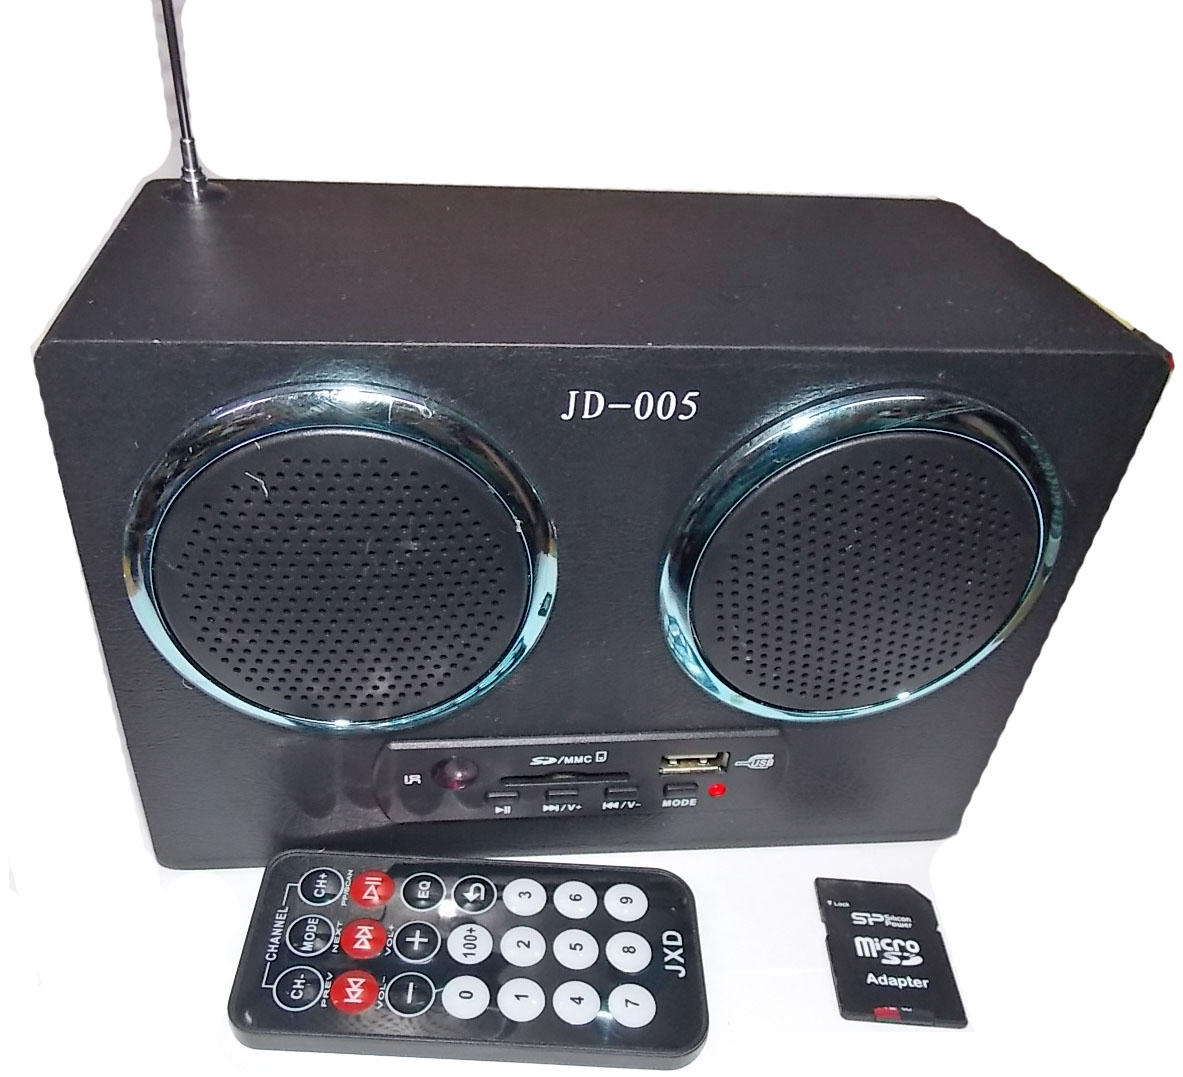 Мультимедиа проигрыватель с радио JD-005 2x2.7W, 5v пит., Li-ion аккумулятор, USB/SD/MP3